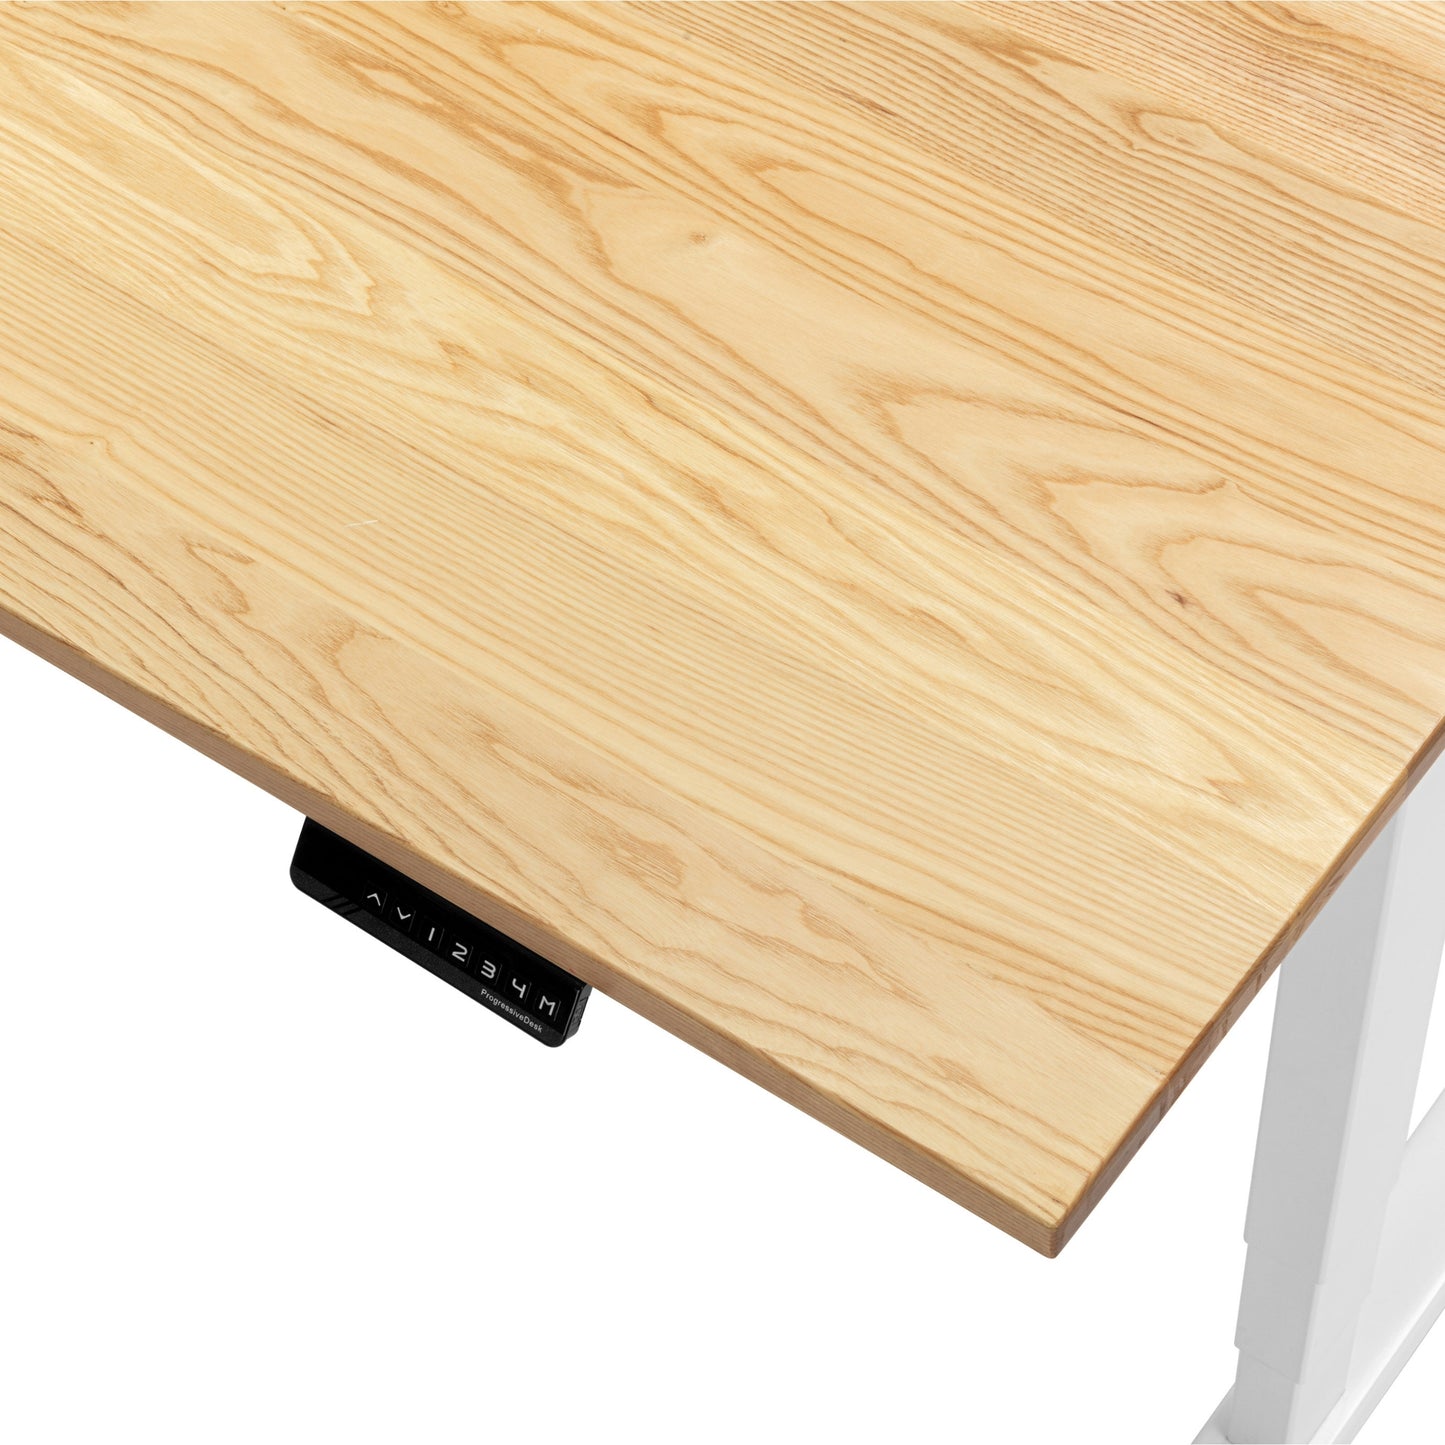 Ash wood tabletop